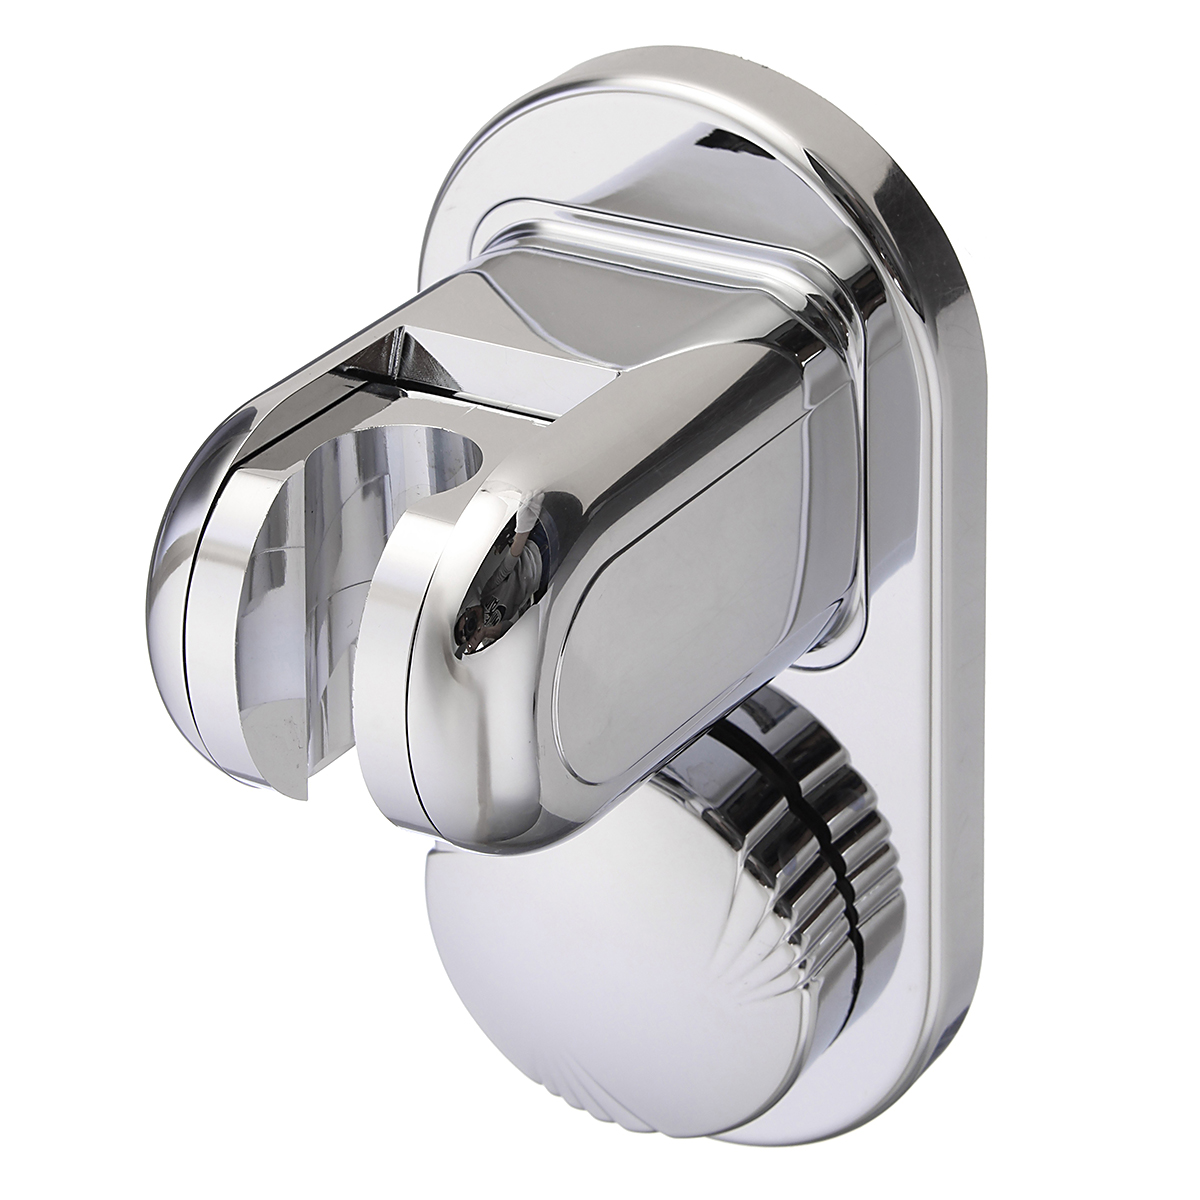 

Bathroom Shower Head Holder Adjustable Faucet Holder Wall Mounted Shower Head Hook Seat Hand Shower Head Holder